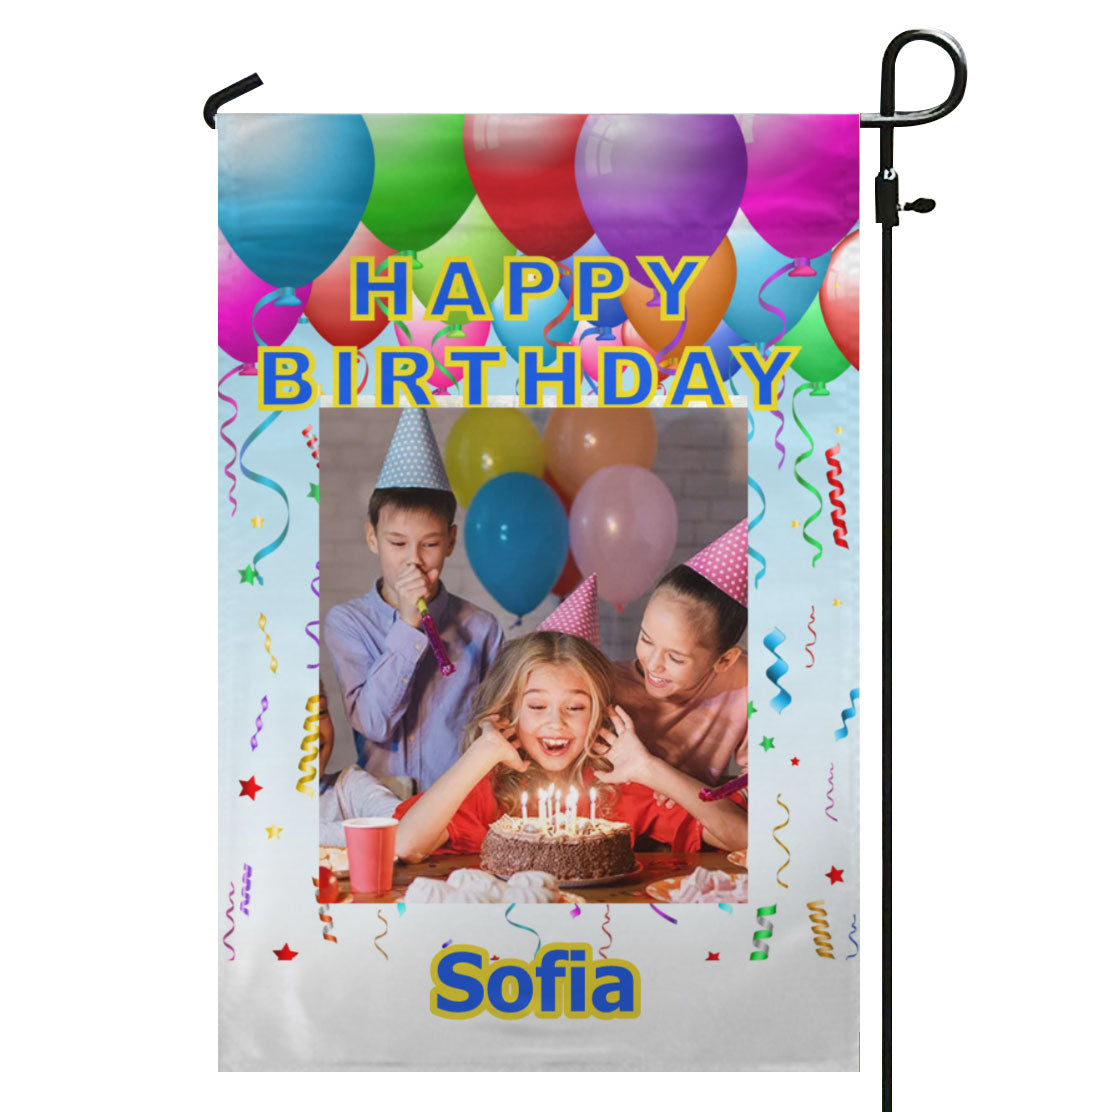 Happy Birthday balloon - Personalized Photo & Name